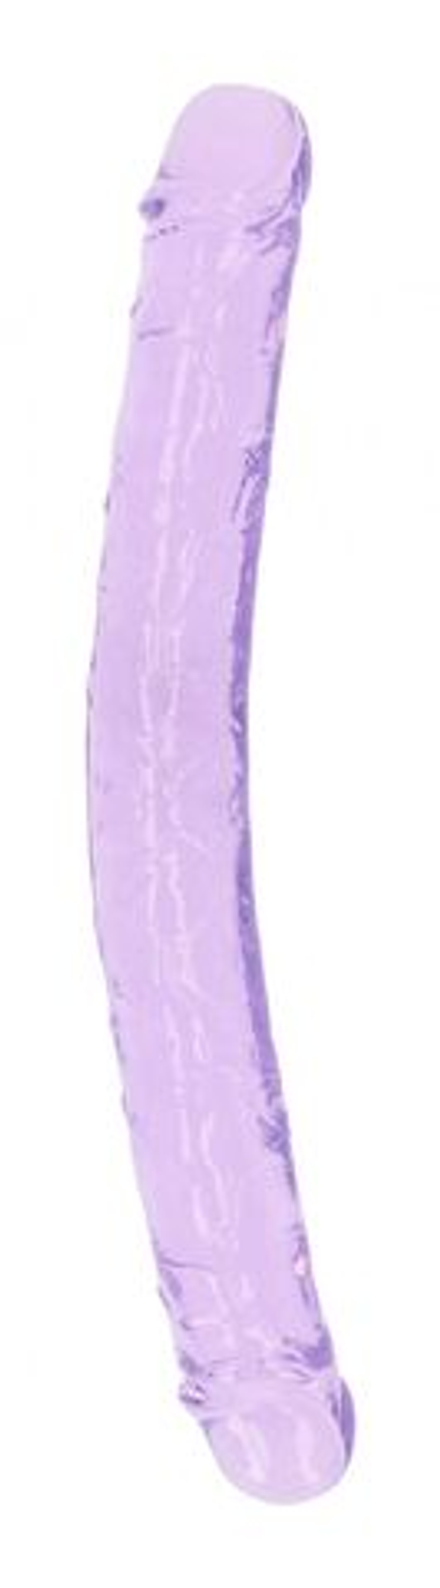 Двусторонний фиолетовый фаллоимитатор - 34 см.